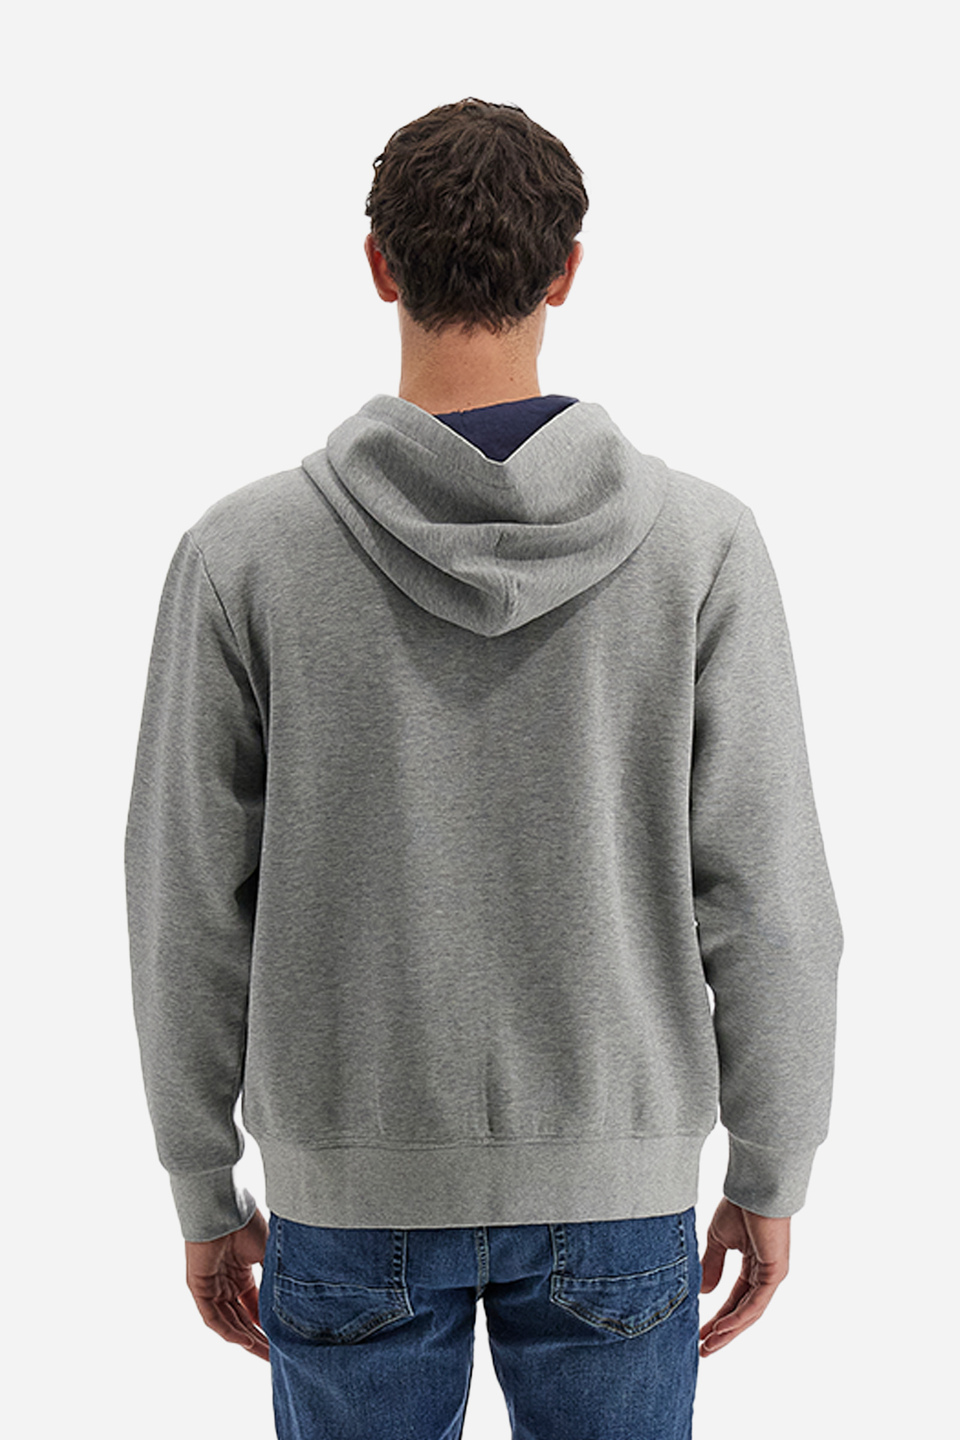 Men's full zip hoodie Logos in solid color large stylized logo - Vangelis | La Martina - Official Online Shop